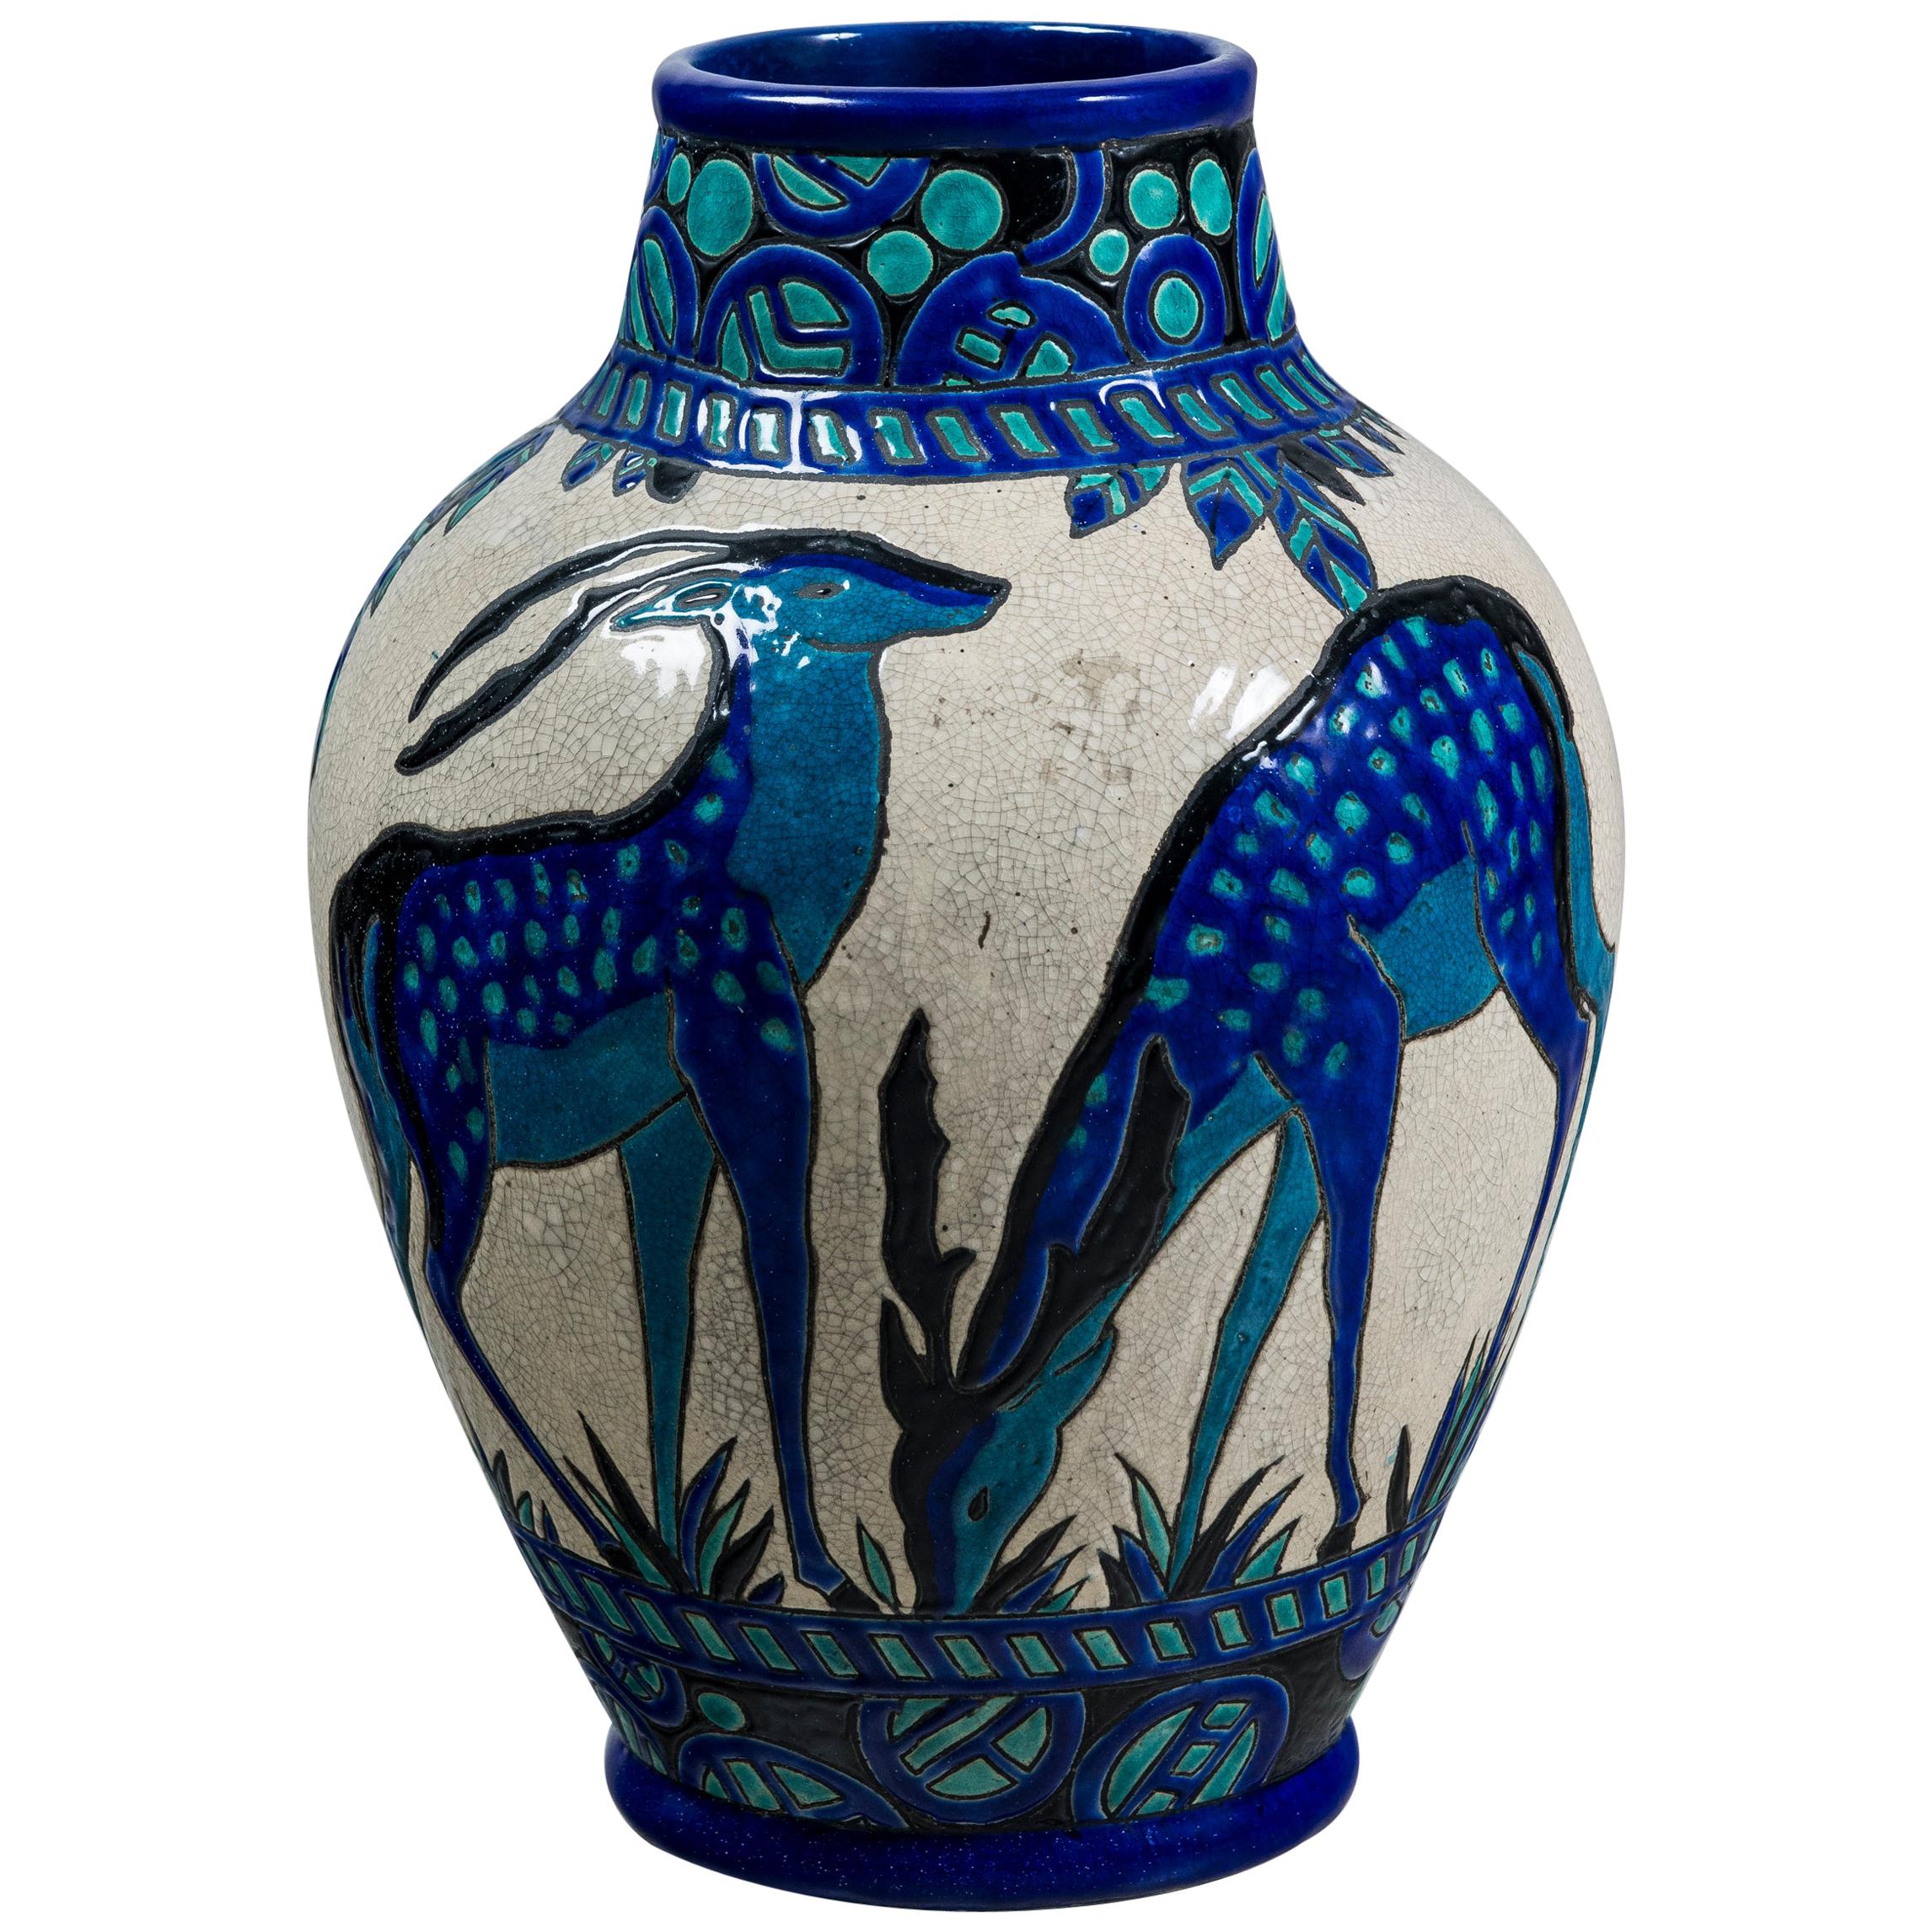 Enamel Ceramic Flower Vase by Charles Catteau Signed Boch La Louvière